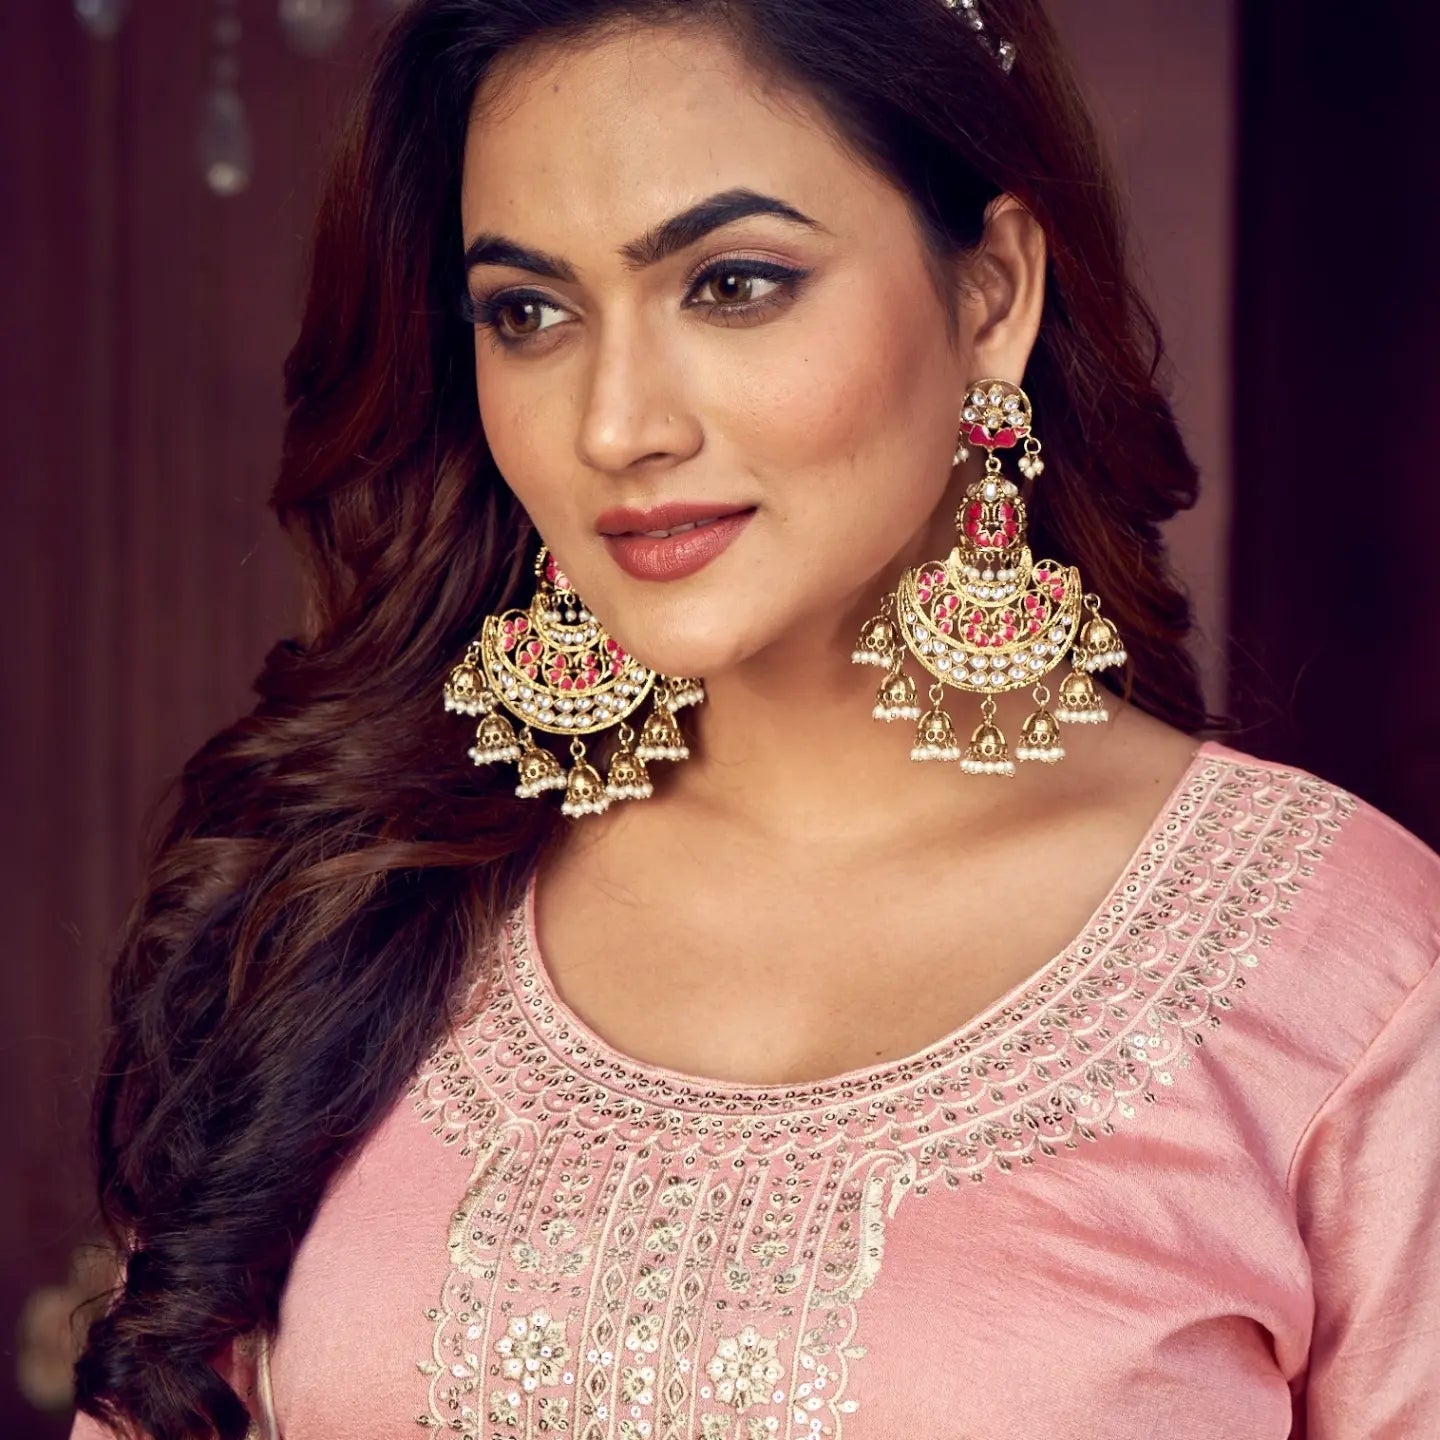 Vritika Chandbali Jhumka Earrings - Pink